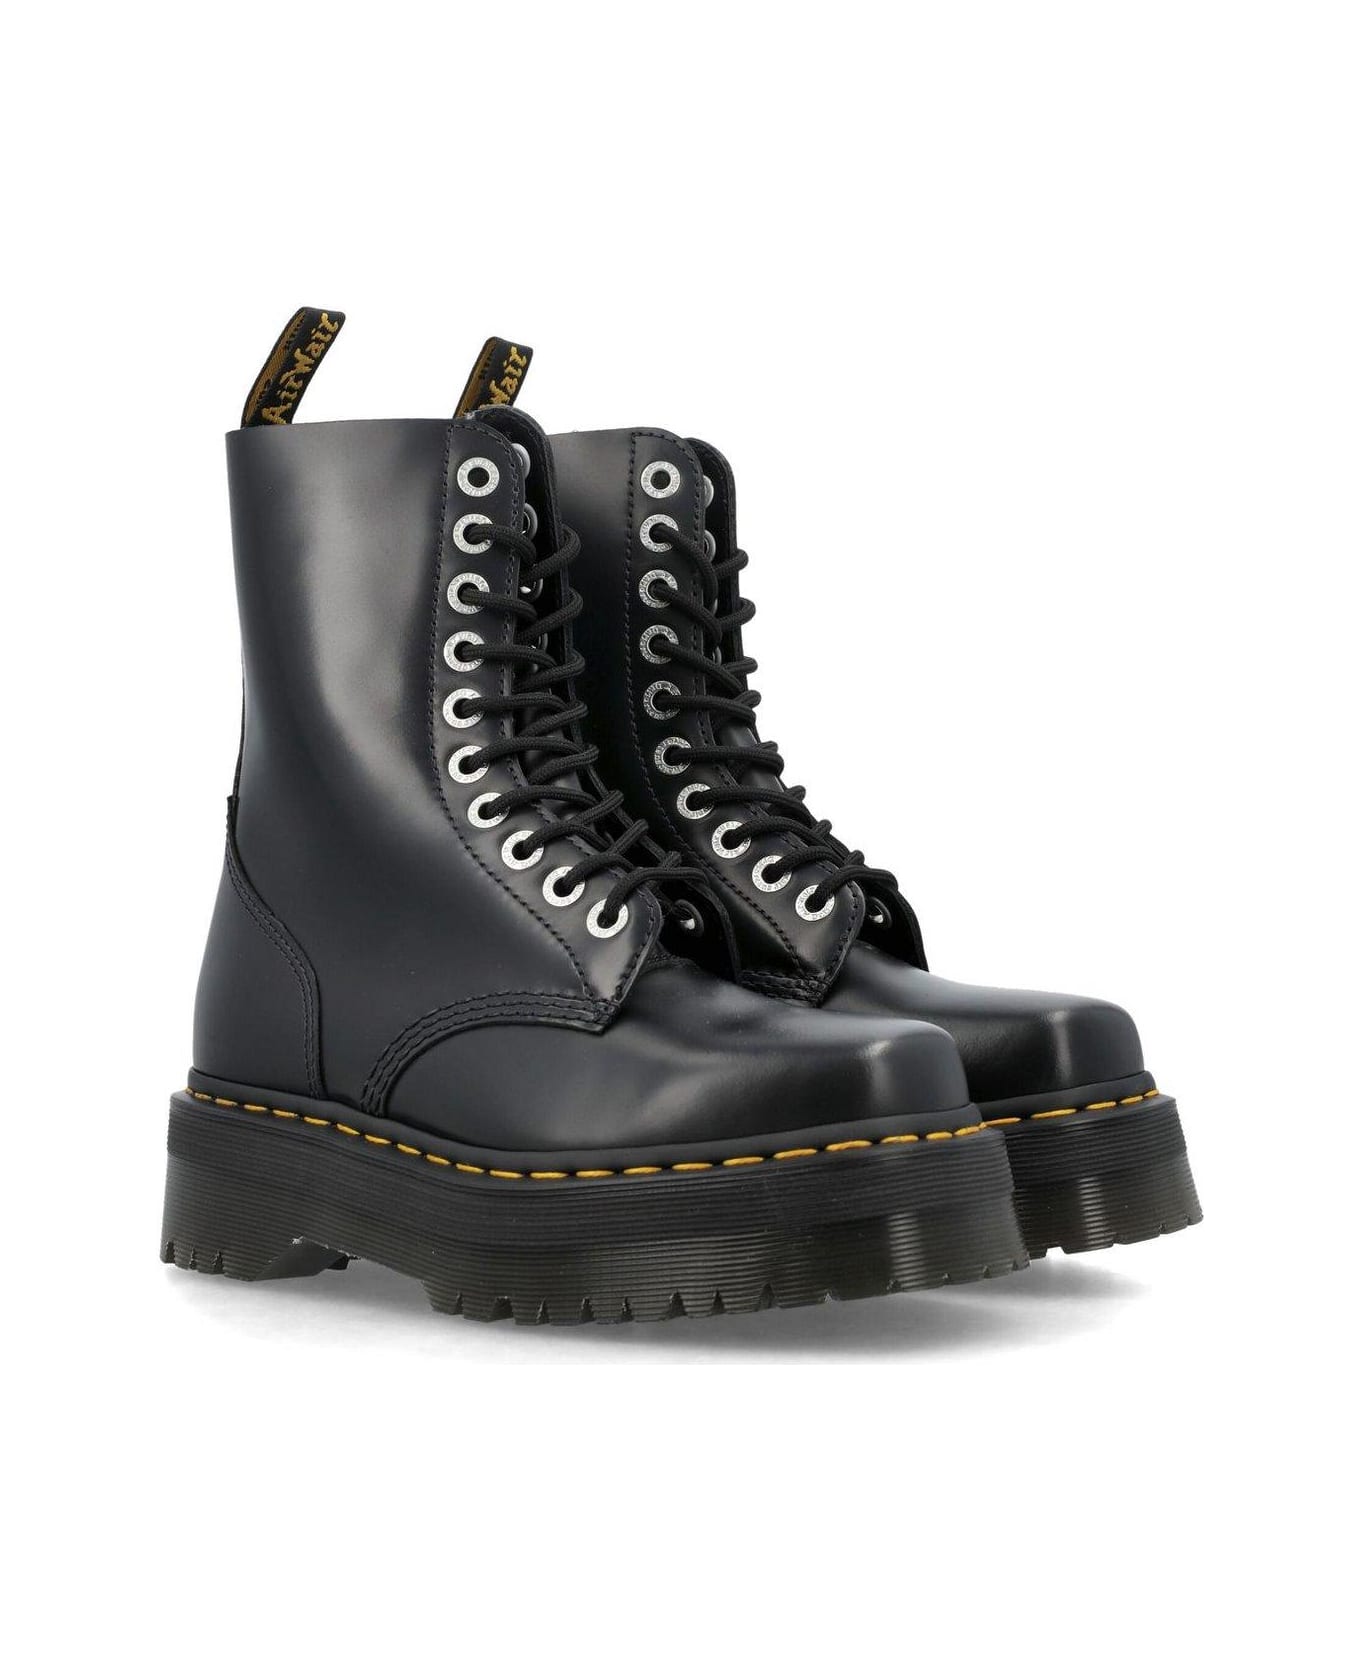 Dr. Martens 1490 Quad Squared Leather Boots - BLACK ブーツ